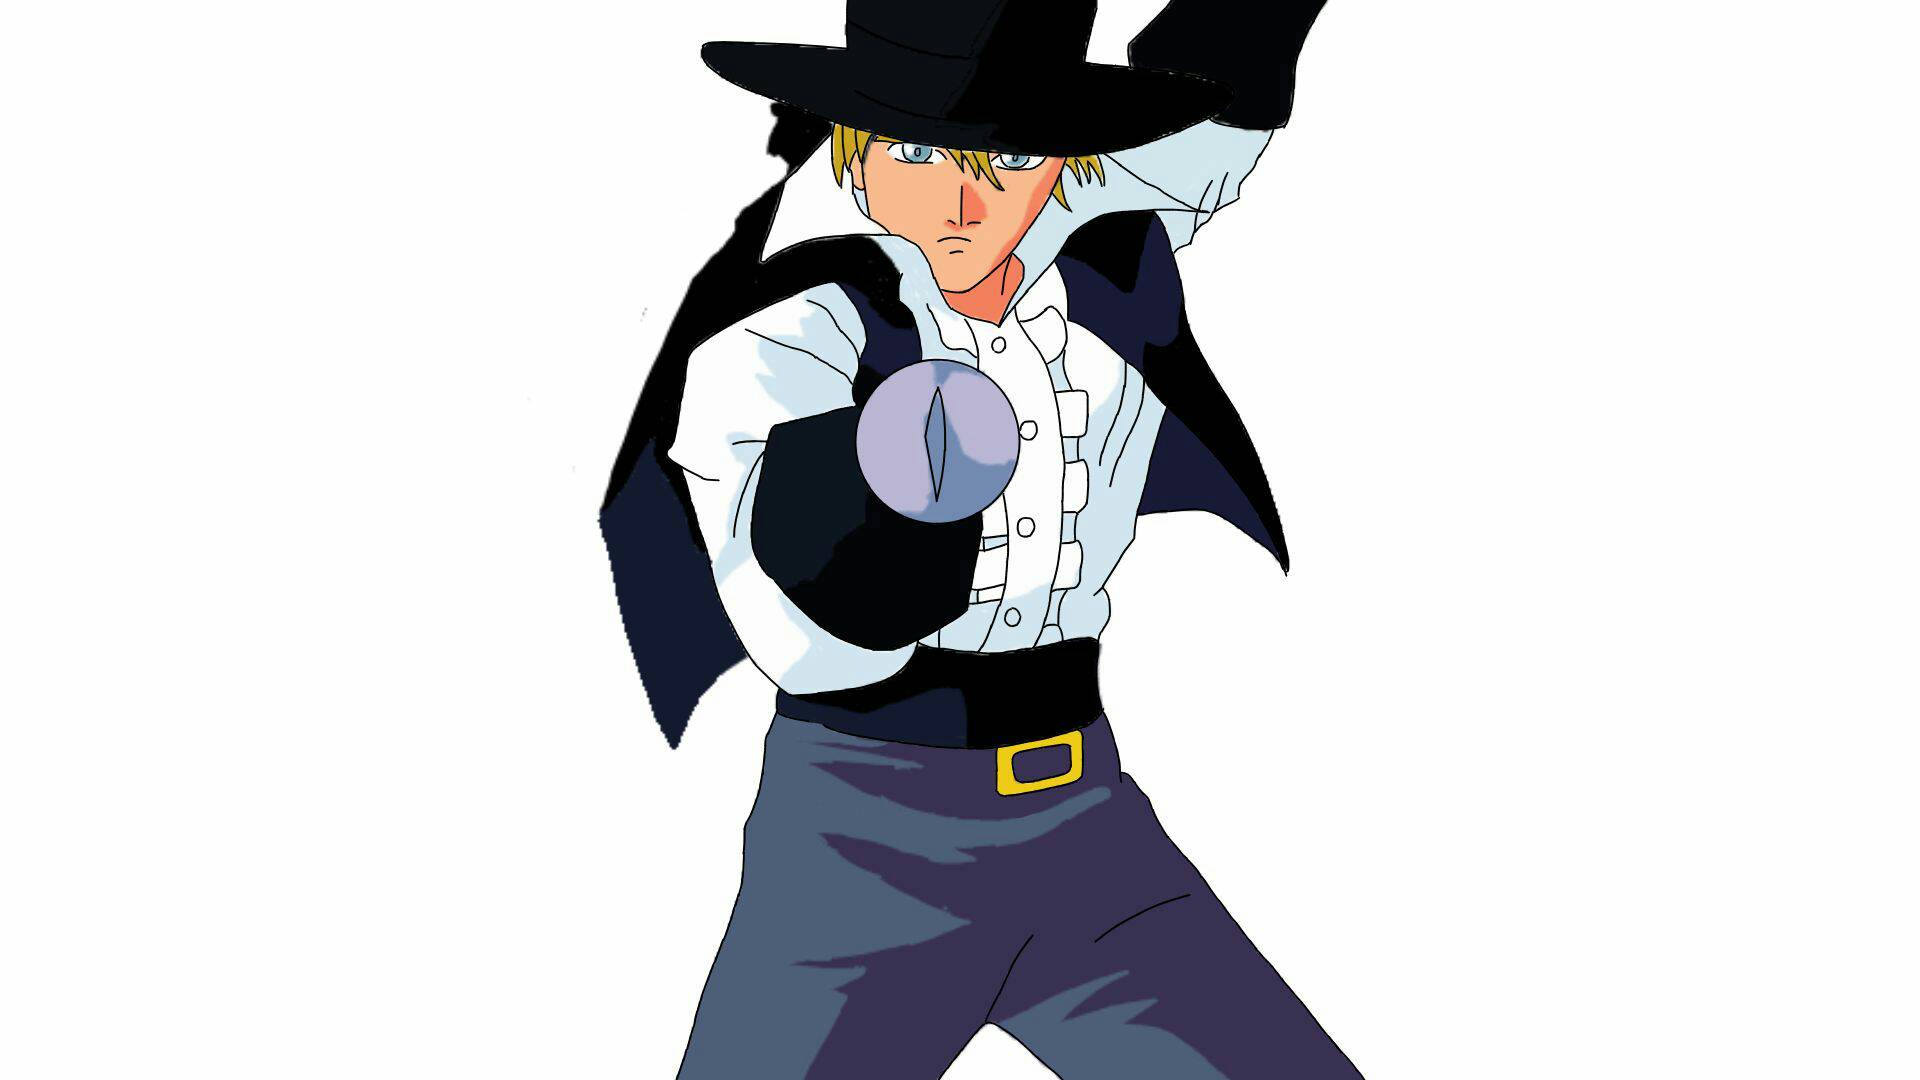 Zorro anime version by cvaldes on DeviantArt